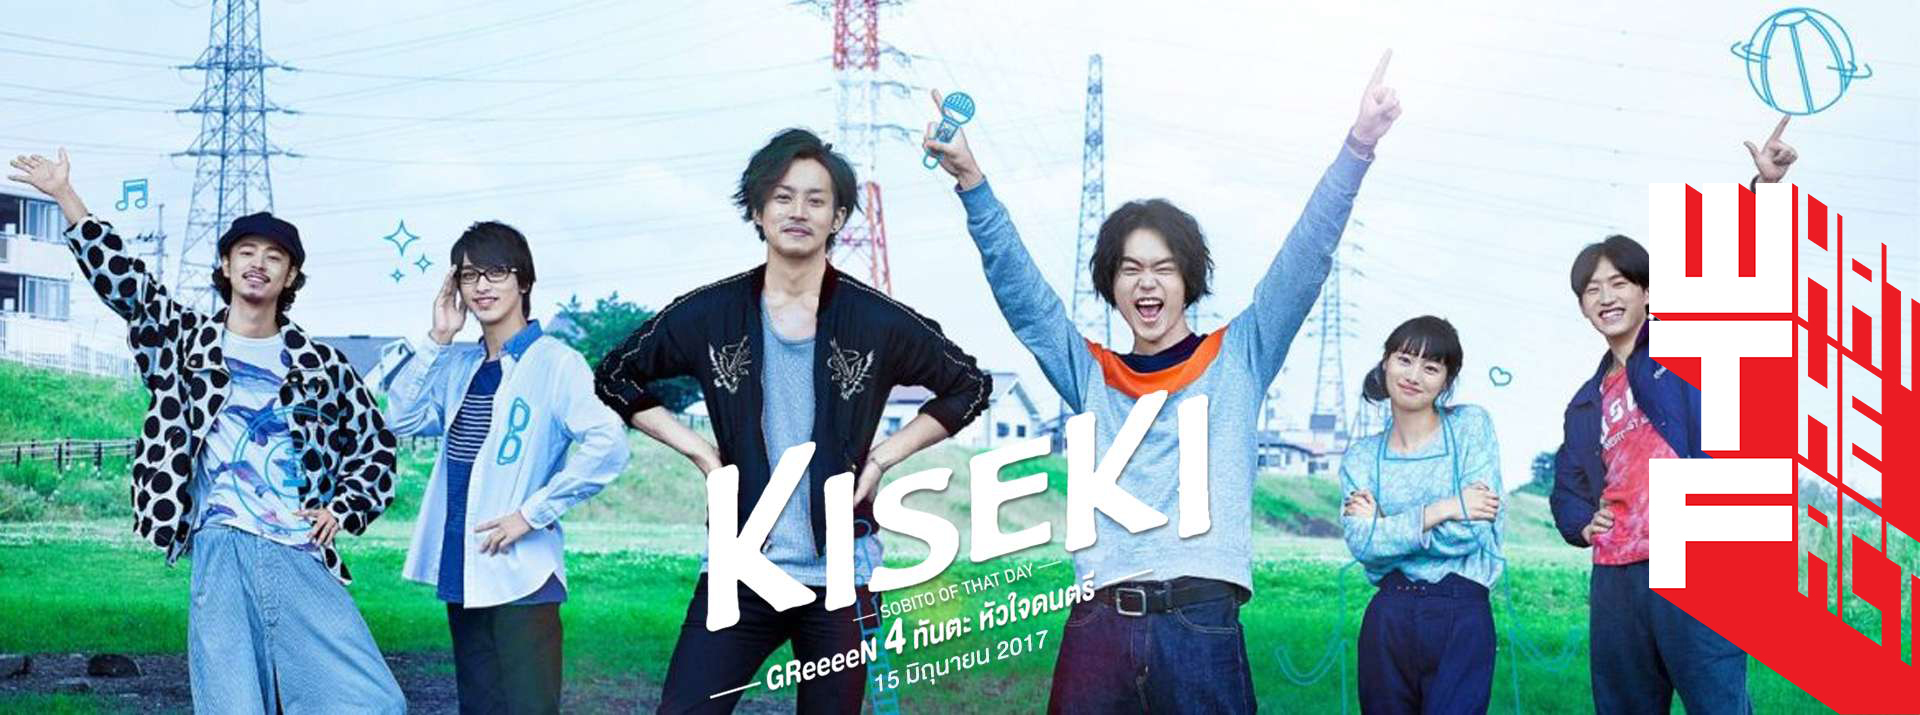 Kiseki บทเพลงแห่งปาฏิหาริย์ของวงดนตรีที่ไม่เปิดเผยหน้าตามาเป็นเวลากว่า 10 ปี !!!